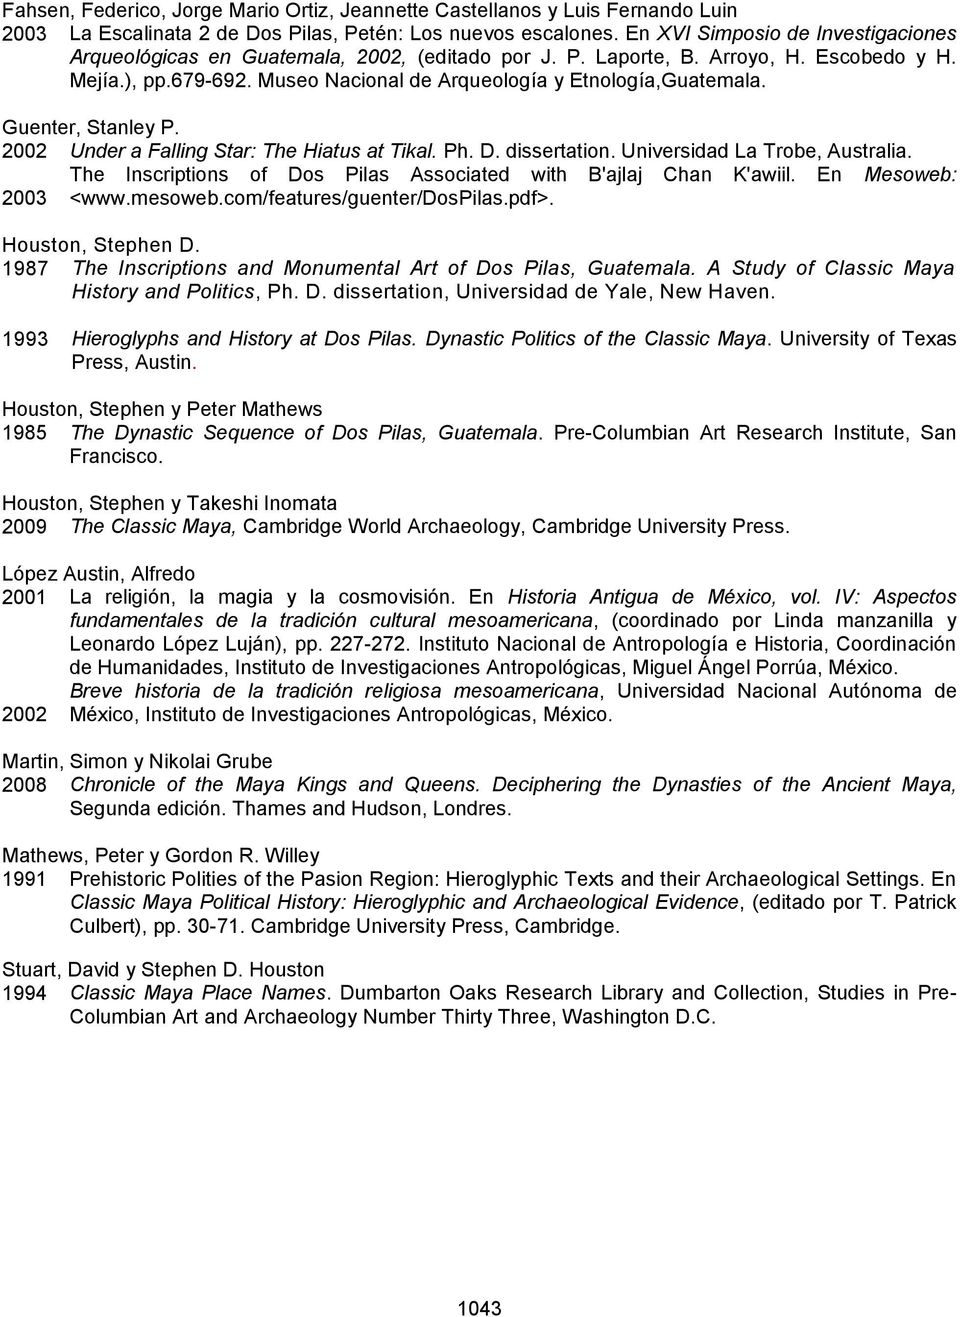 Guenter, Stanley P. 2002 Under a Falling Star: The Hiatus at Tikal. Ph. D. dissertation. Universidad La Trobe, Australia. The Inscriptions of Dos Pilas Associated with B'ajlaj Chan K'awiil.